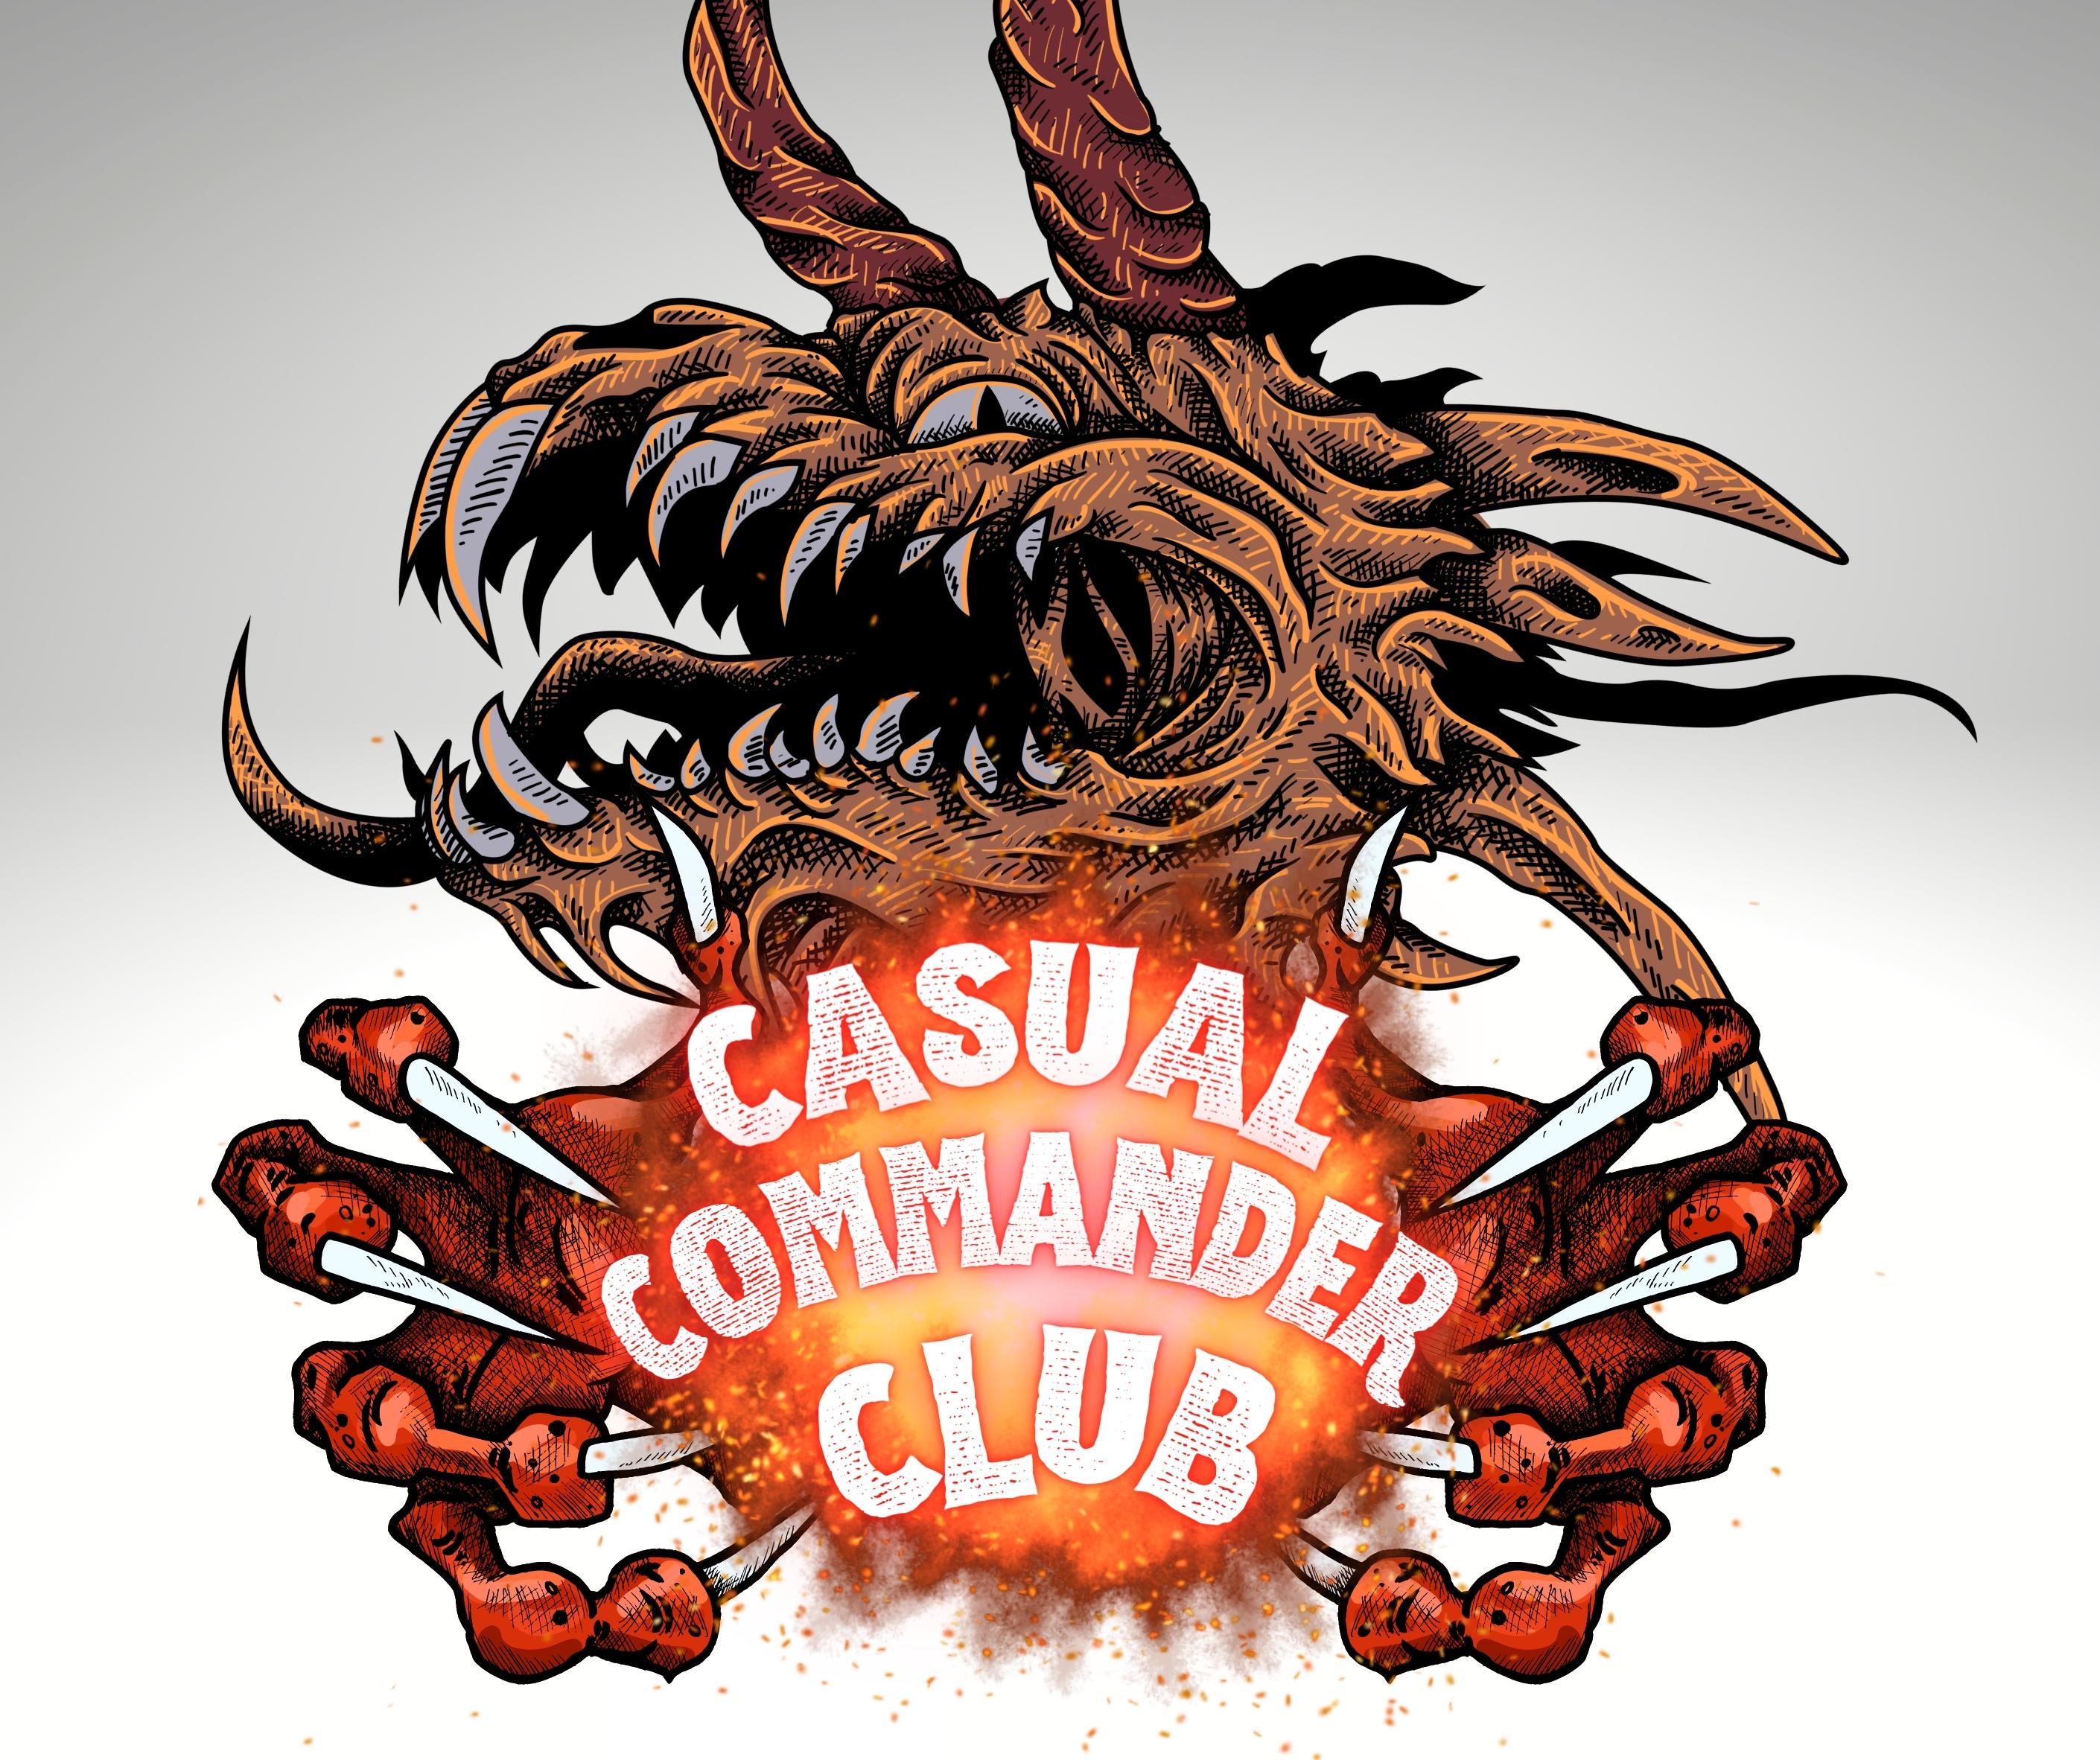 Casual Commander Club Logo